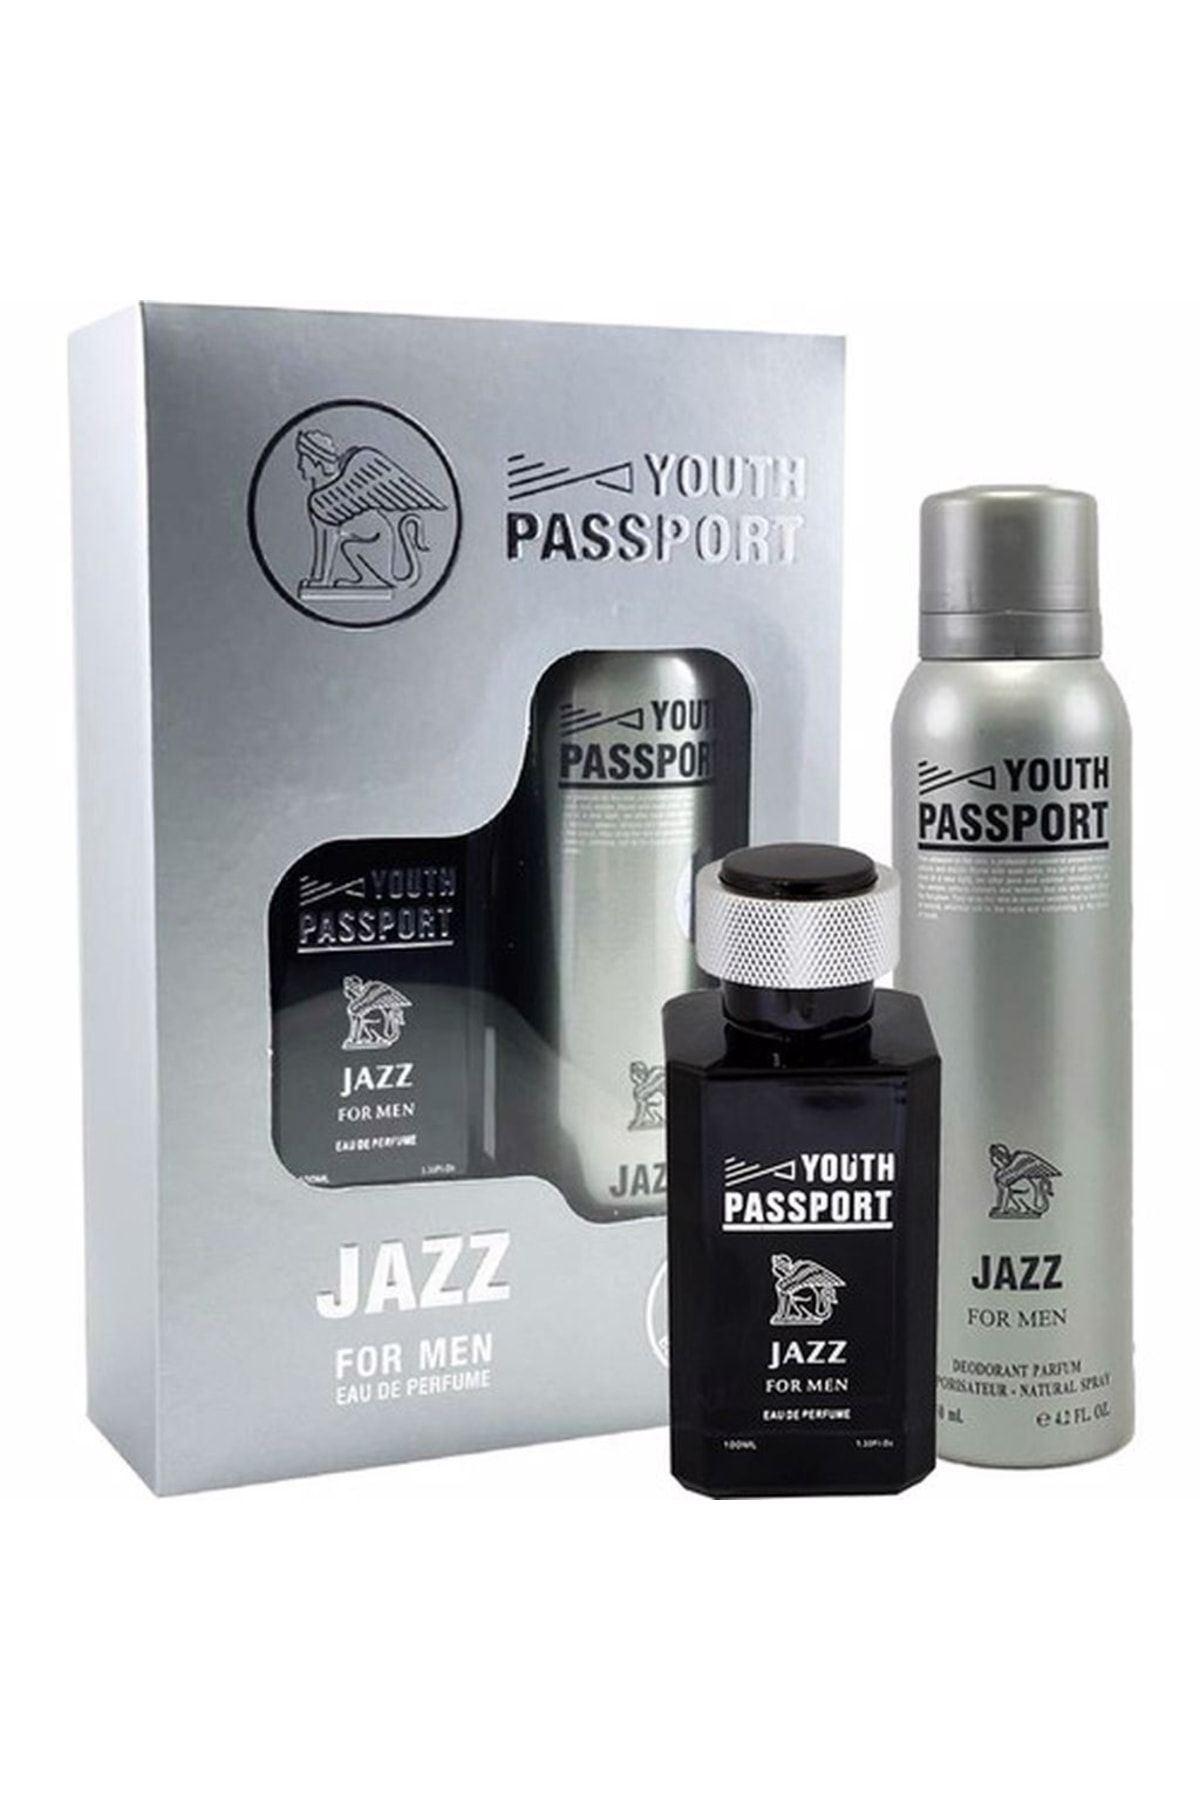 Youth Passport Jazz Erkek Parfüm 100ml Edp + Deo Set